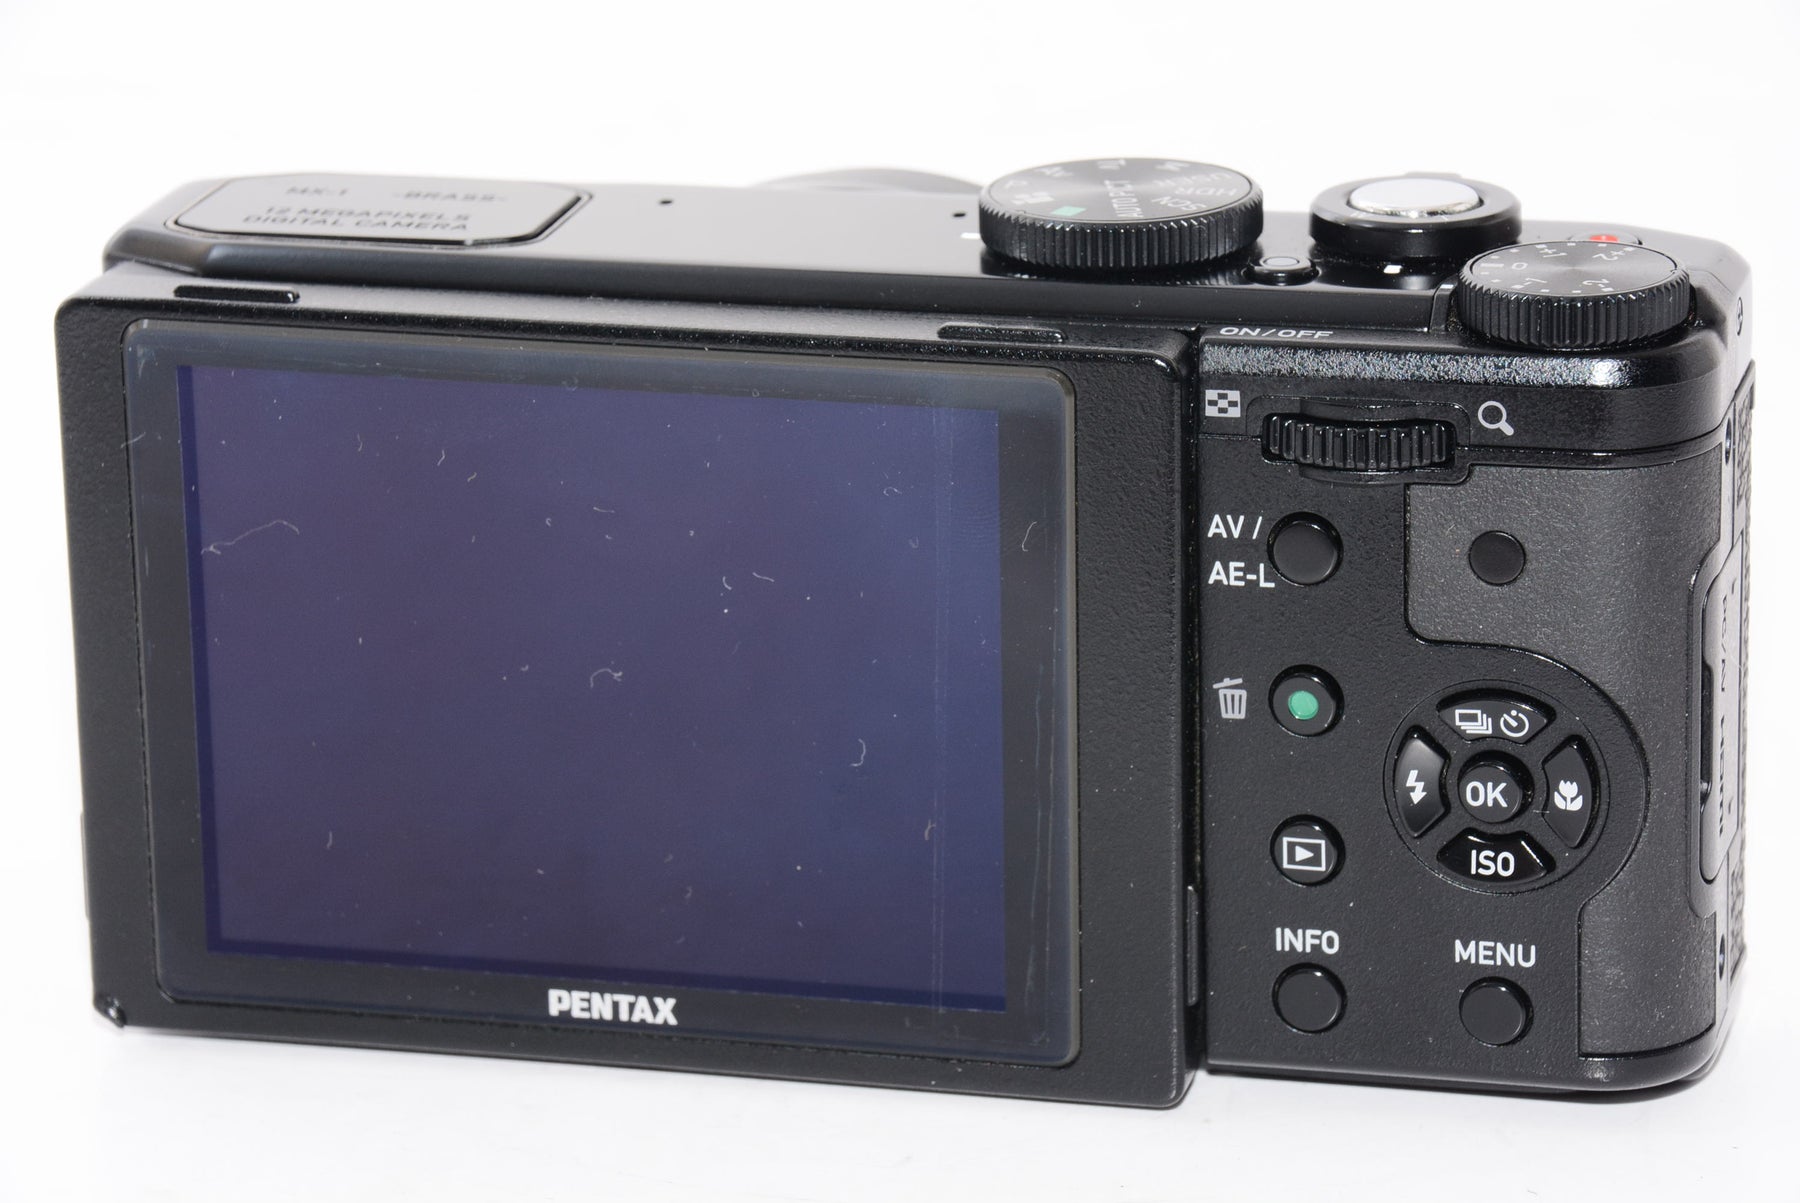 PENTAX デジタルカメラ MX-1 クラシックブラック 1/1.7 - カメラ